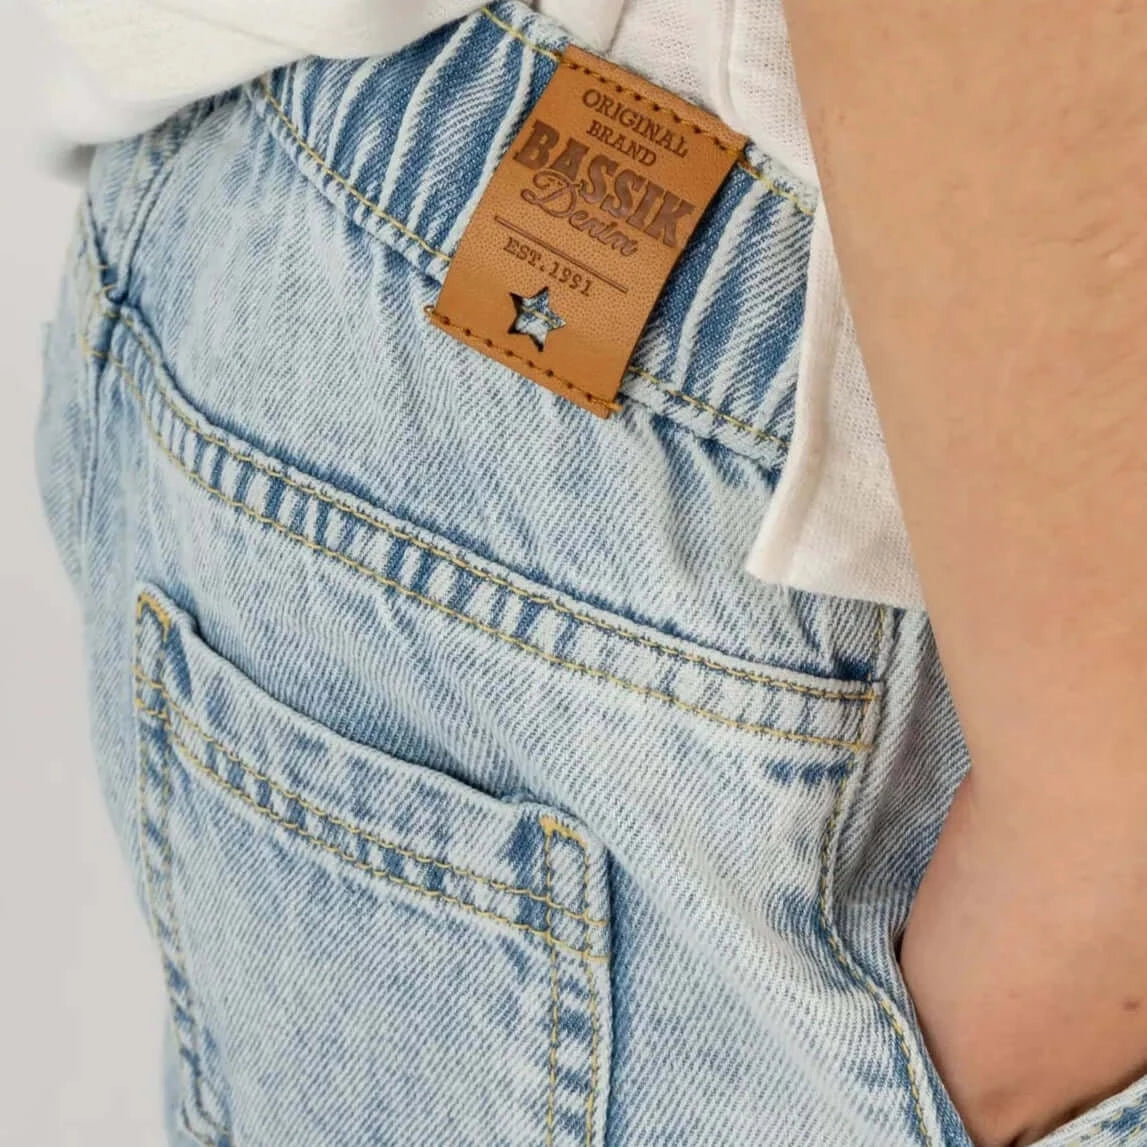 Charangas jeansshorts modell Barcelona - Loose fit denim